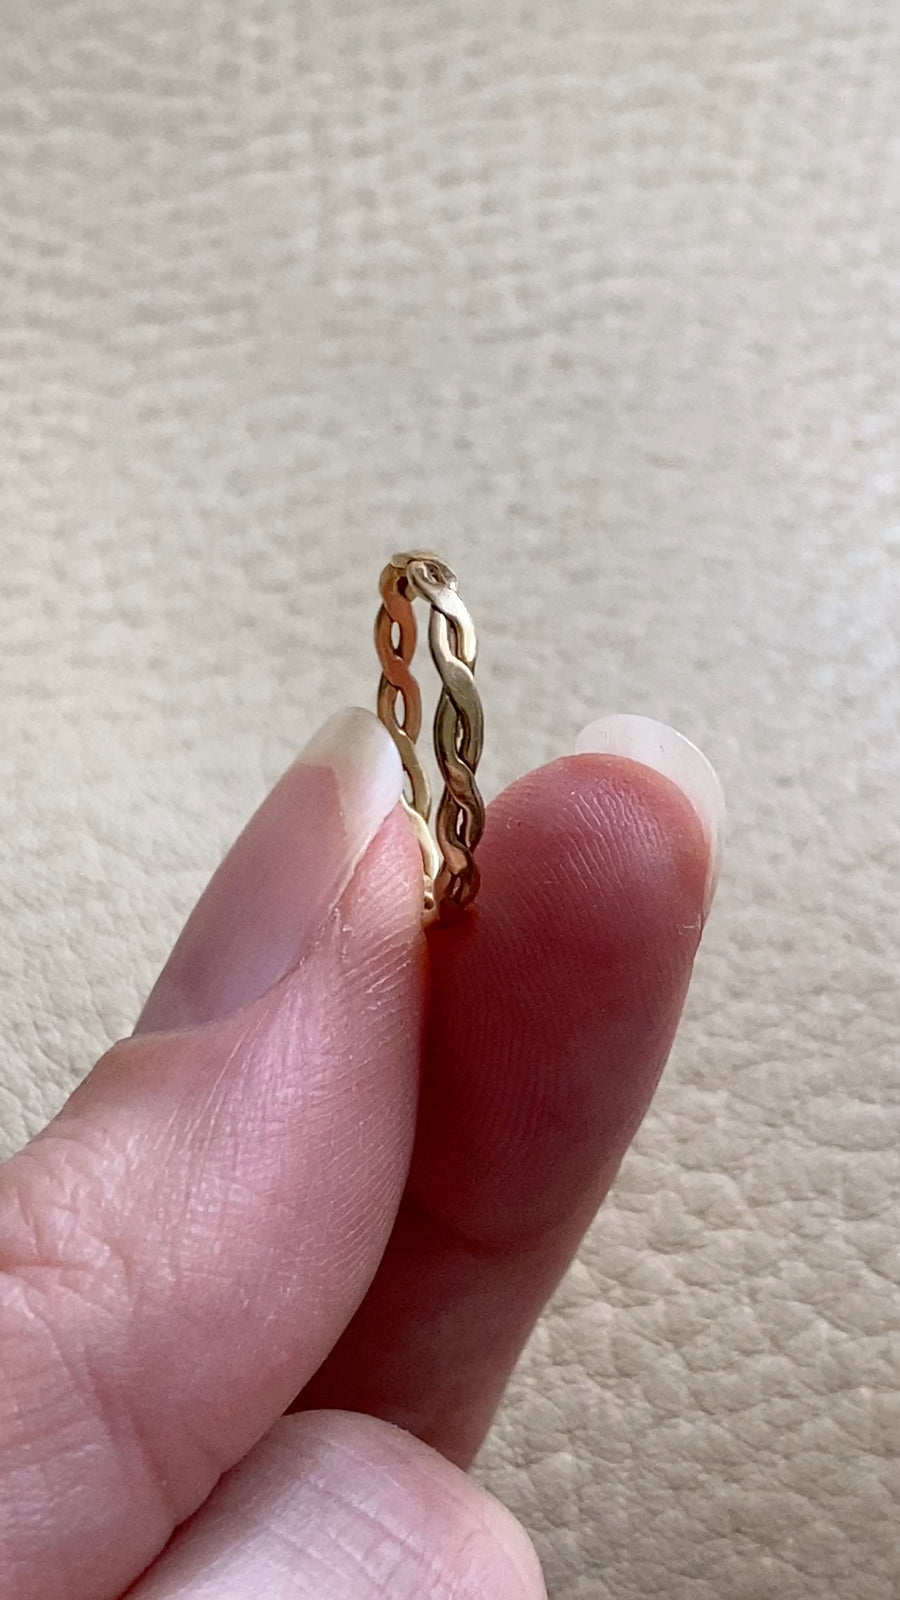 18k gold ring - Scandinavian vintage double strand twist- size 5